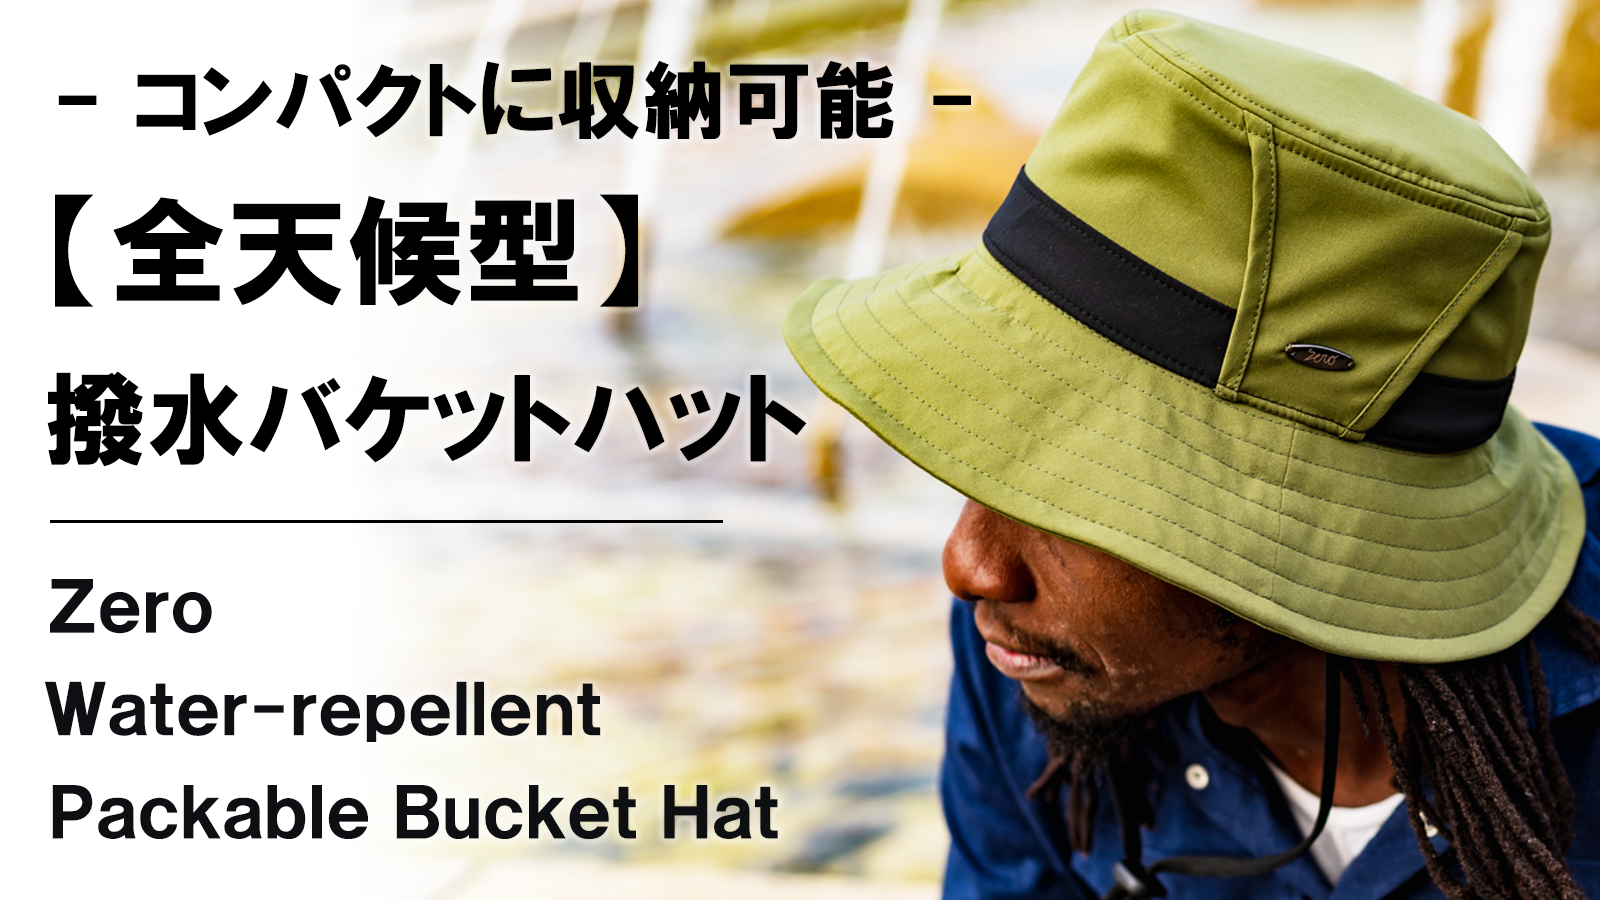 New Makuake Project【撥水透湿＆完全遮光【オールウェザー対応】小さく収納可能で持ち運べるバケットハット】